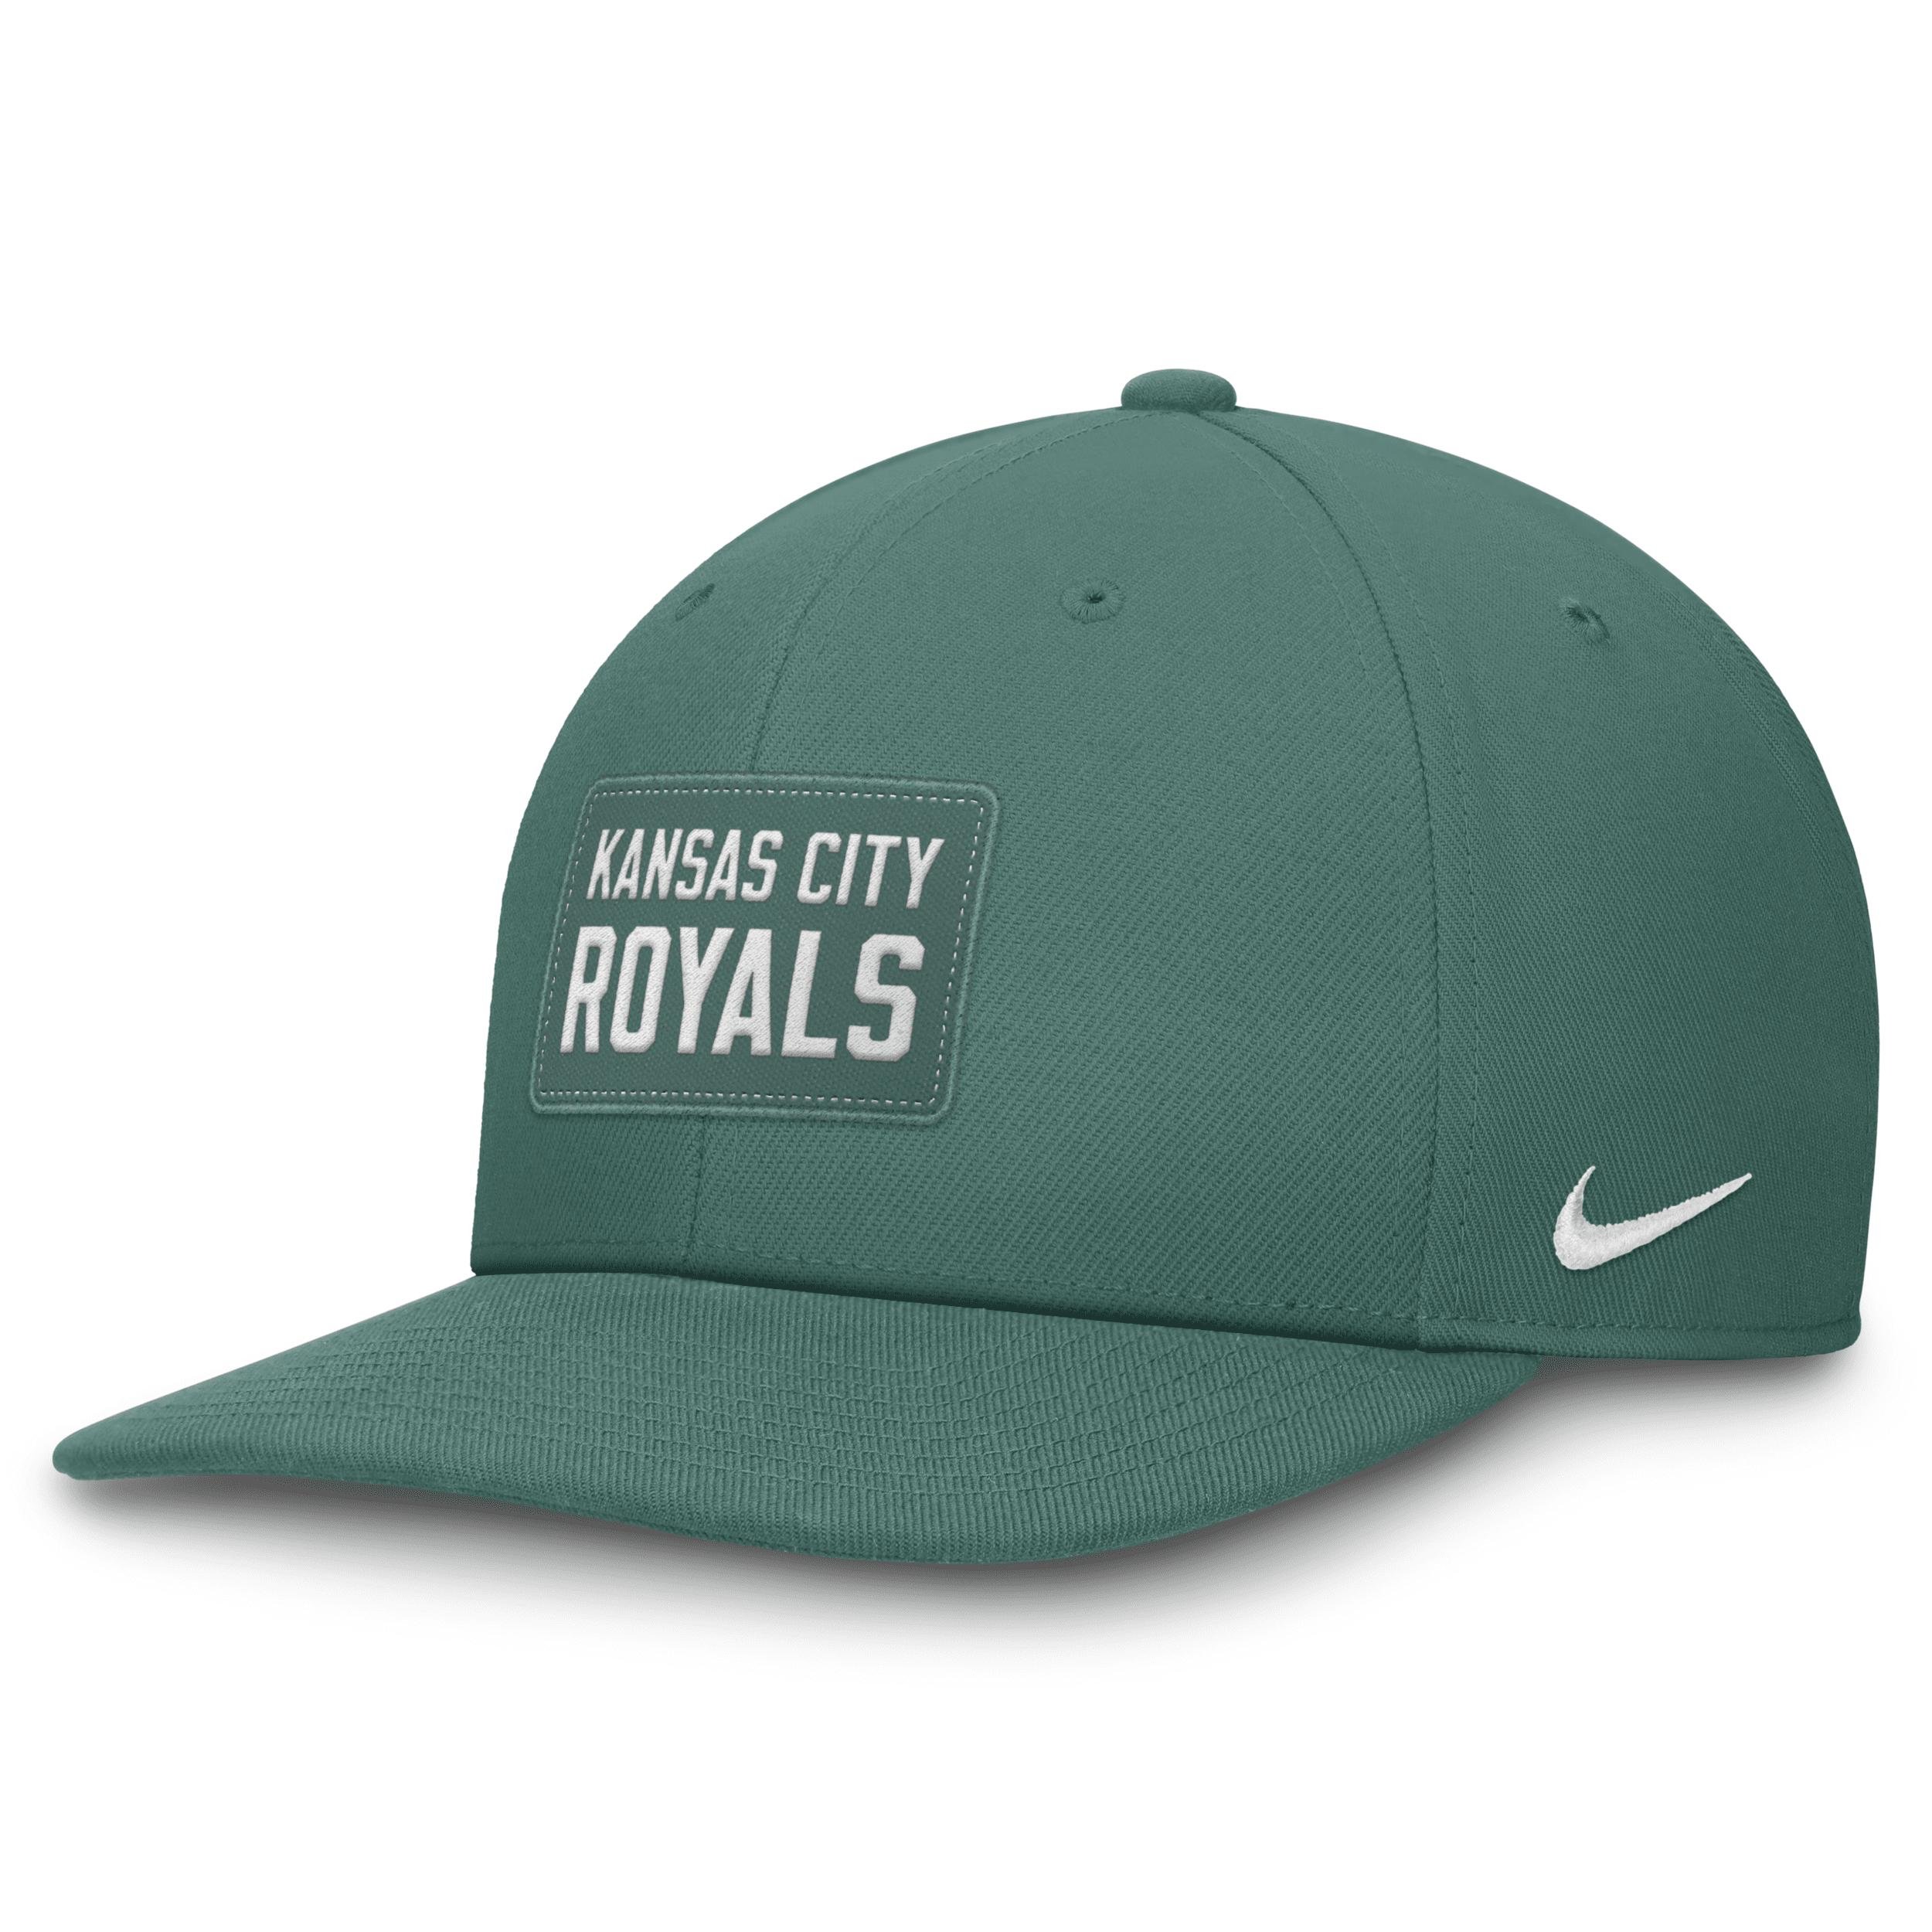 Kansas City Royals Bicoastal Pro Nike Unisex Dri-FIT MLB Adjustable Hat by NIKE